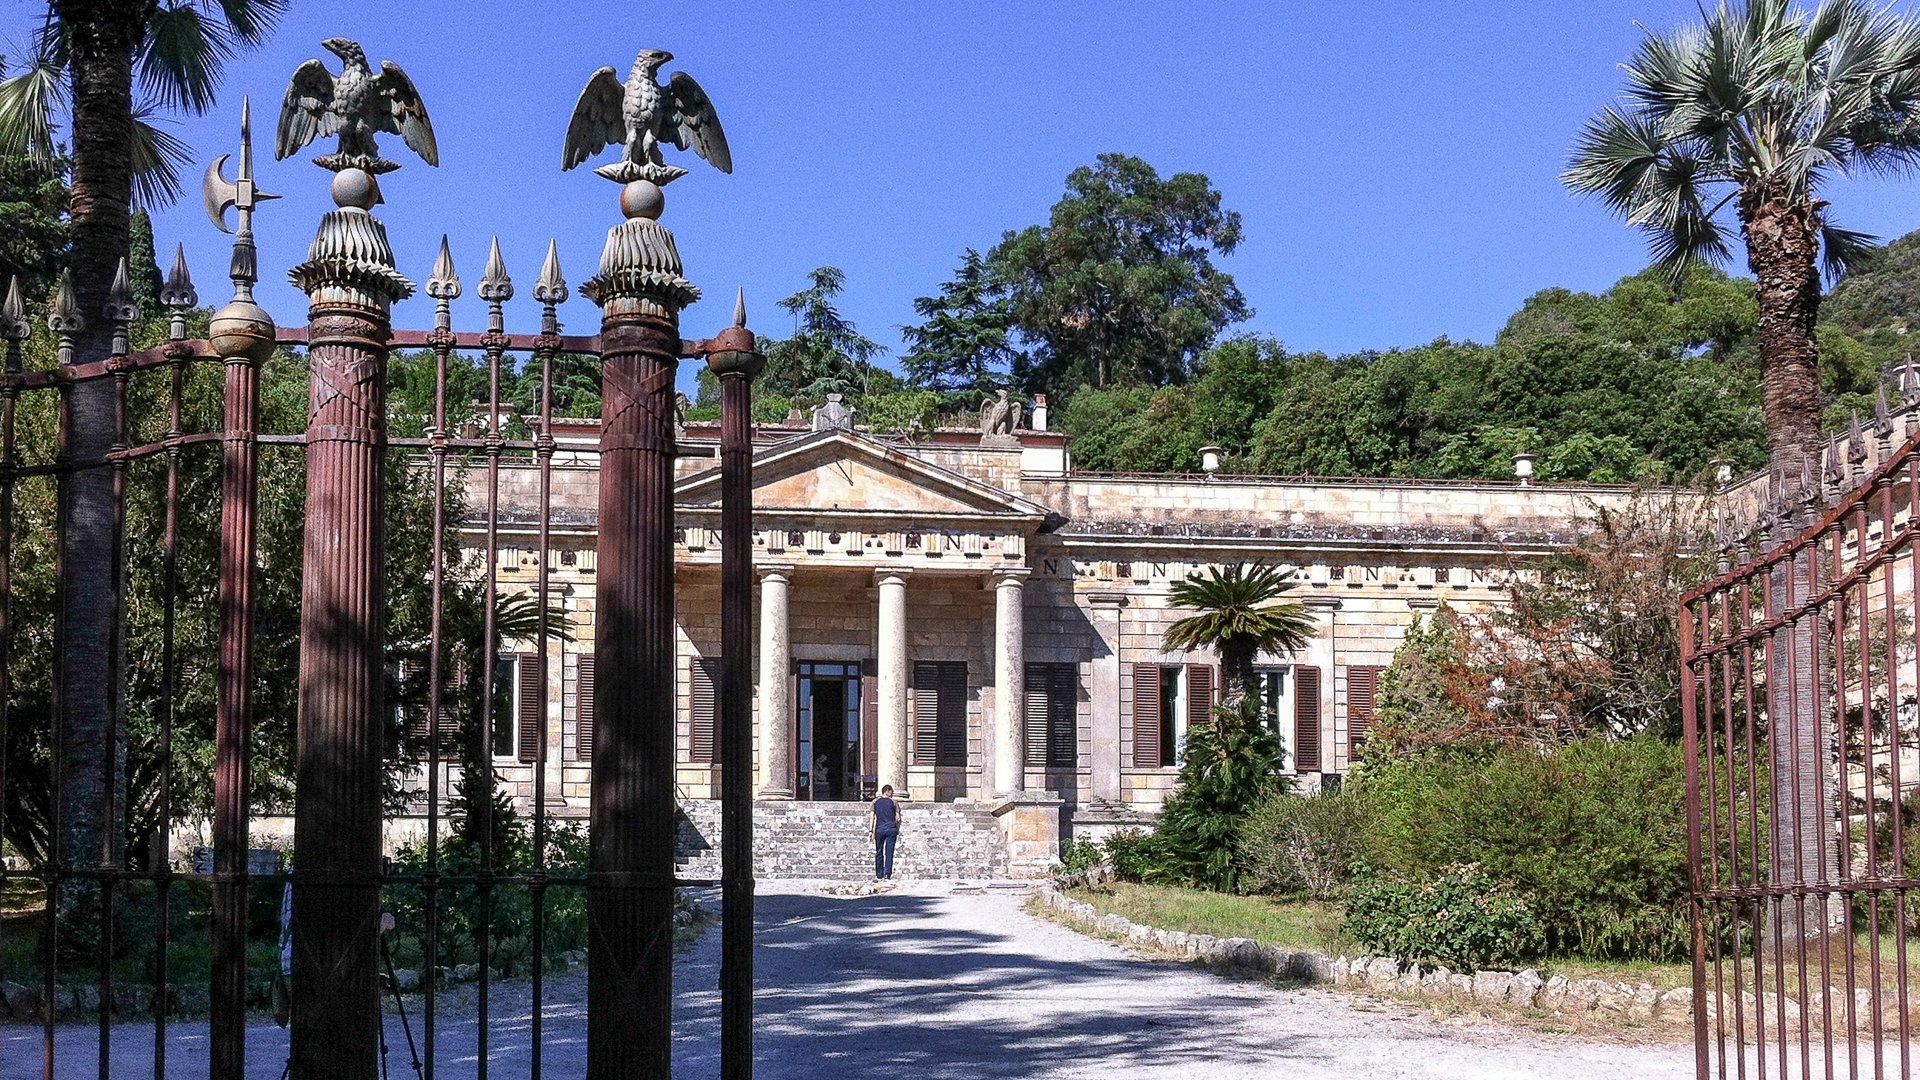 Villa San Martino, Elba island